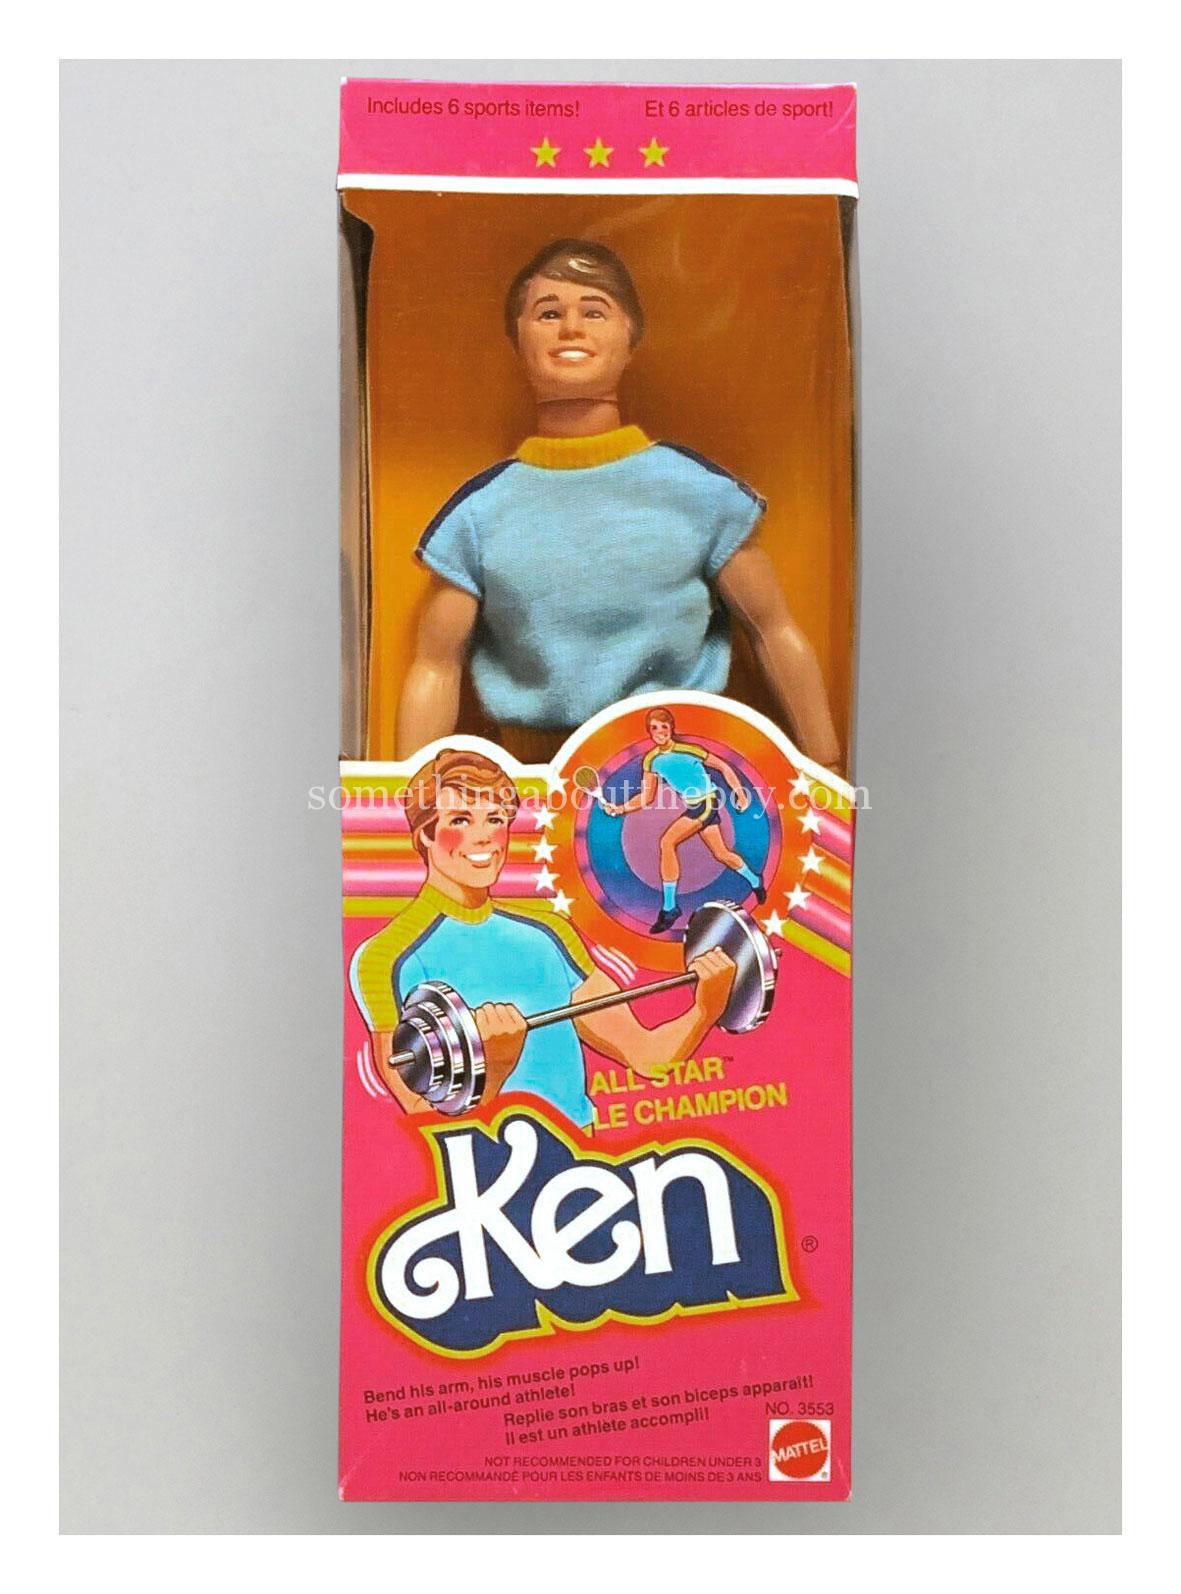 1982 #3553 All Star Ken in Canadian packaging